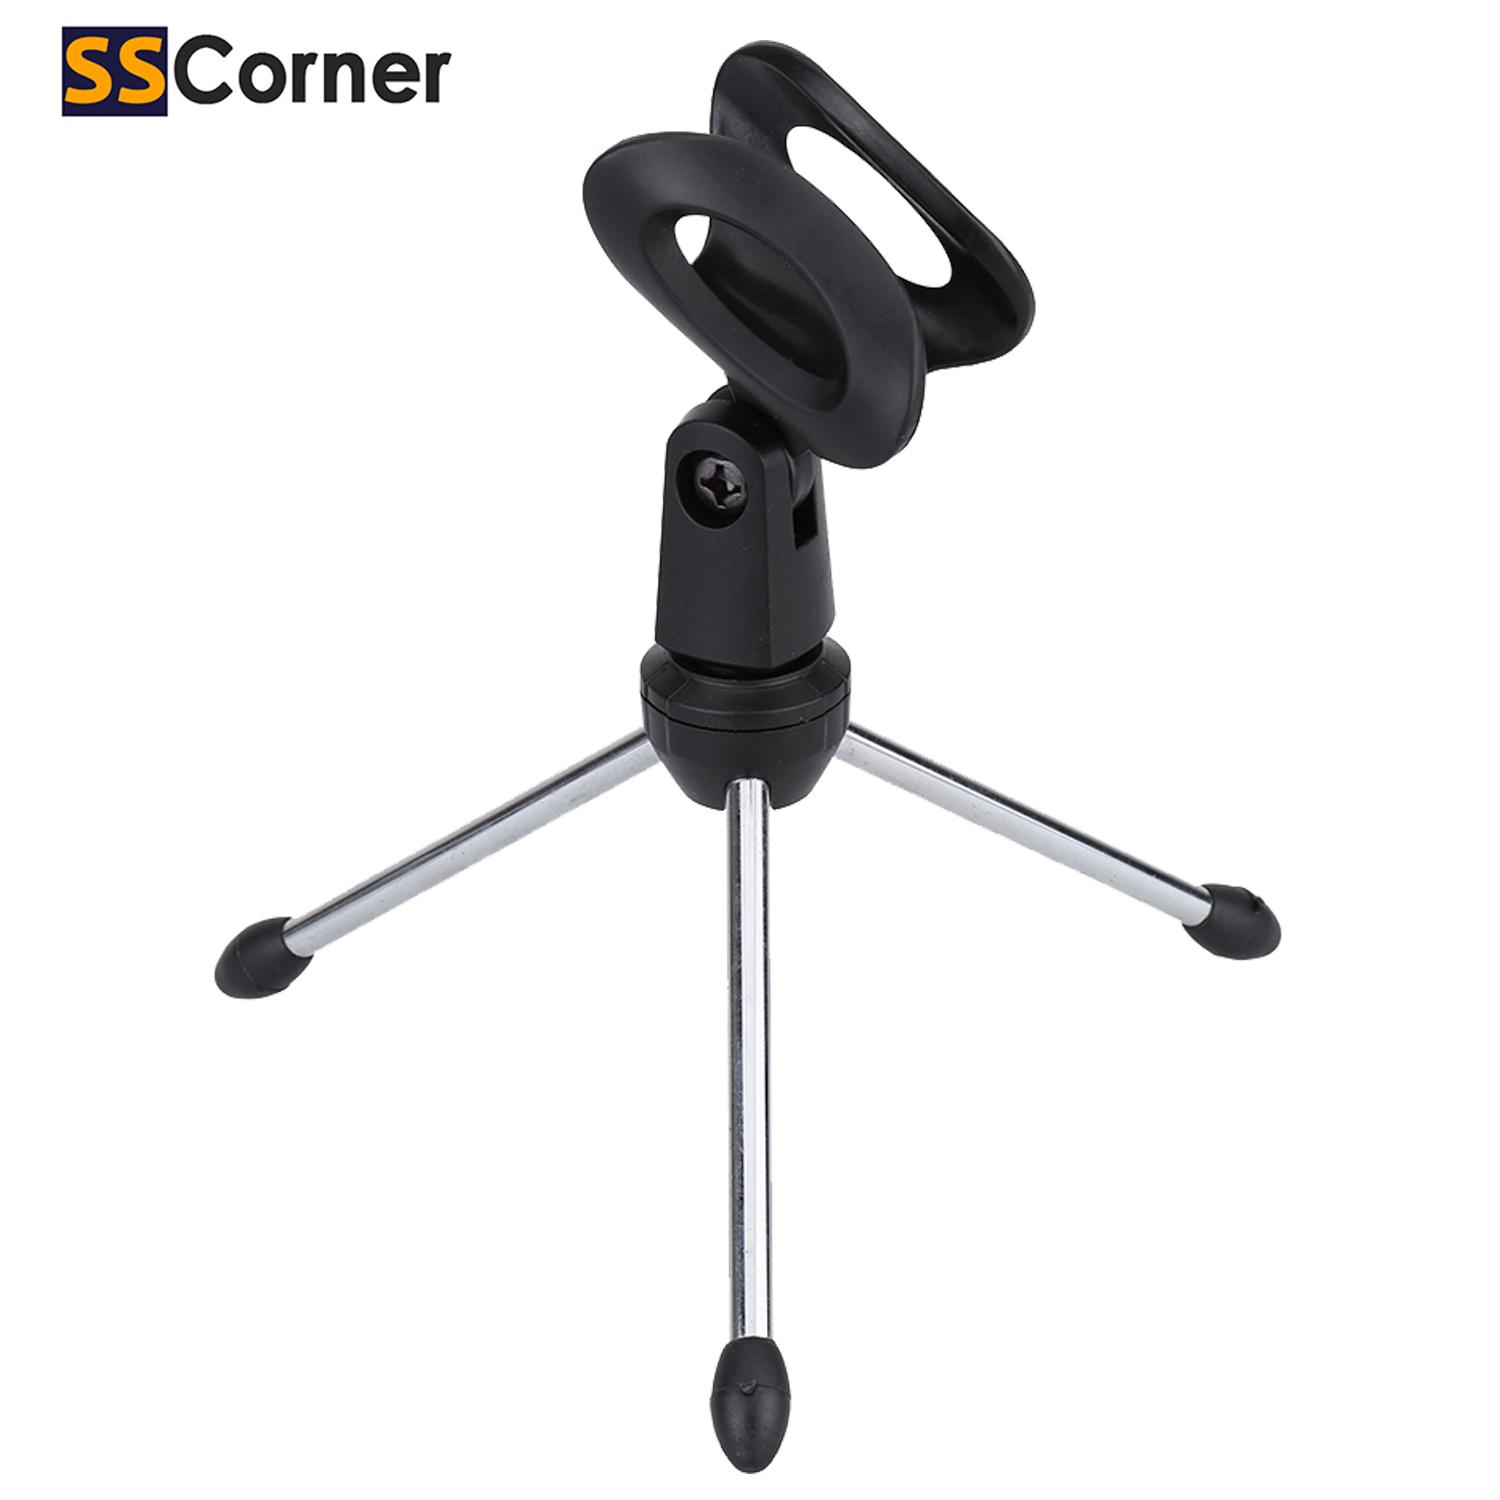 SS Corner Profession Microphone Stands Universal Adjustable Holder Mic Tripod Stand BC - 08 black